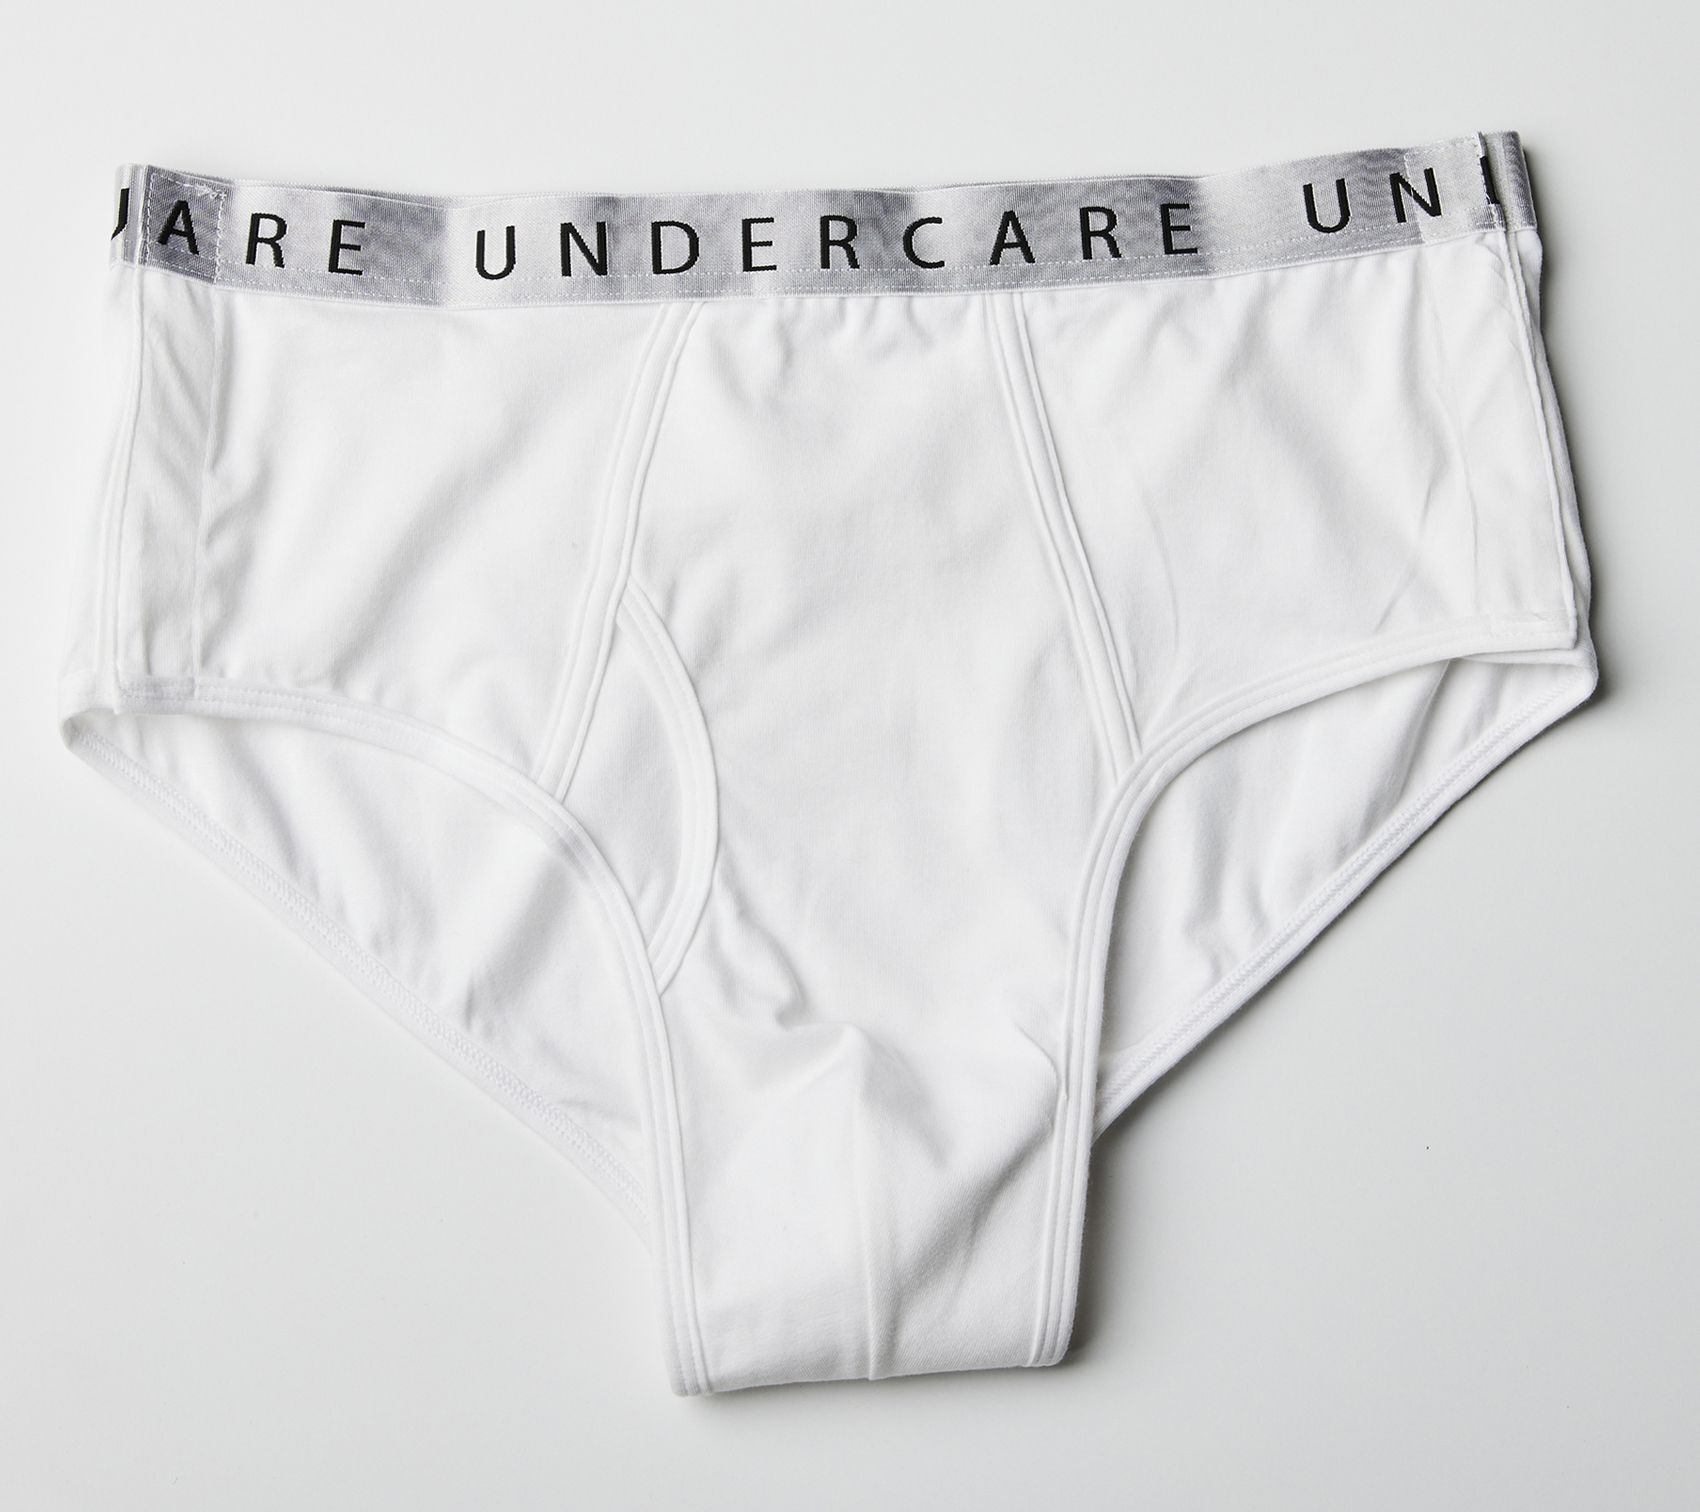 Undercare - Men's Underwear Large (36-38) - Men's Clothing 